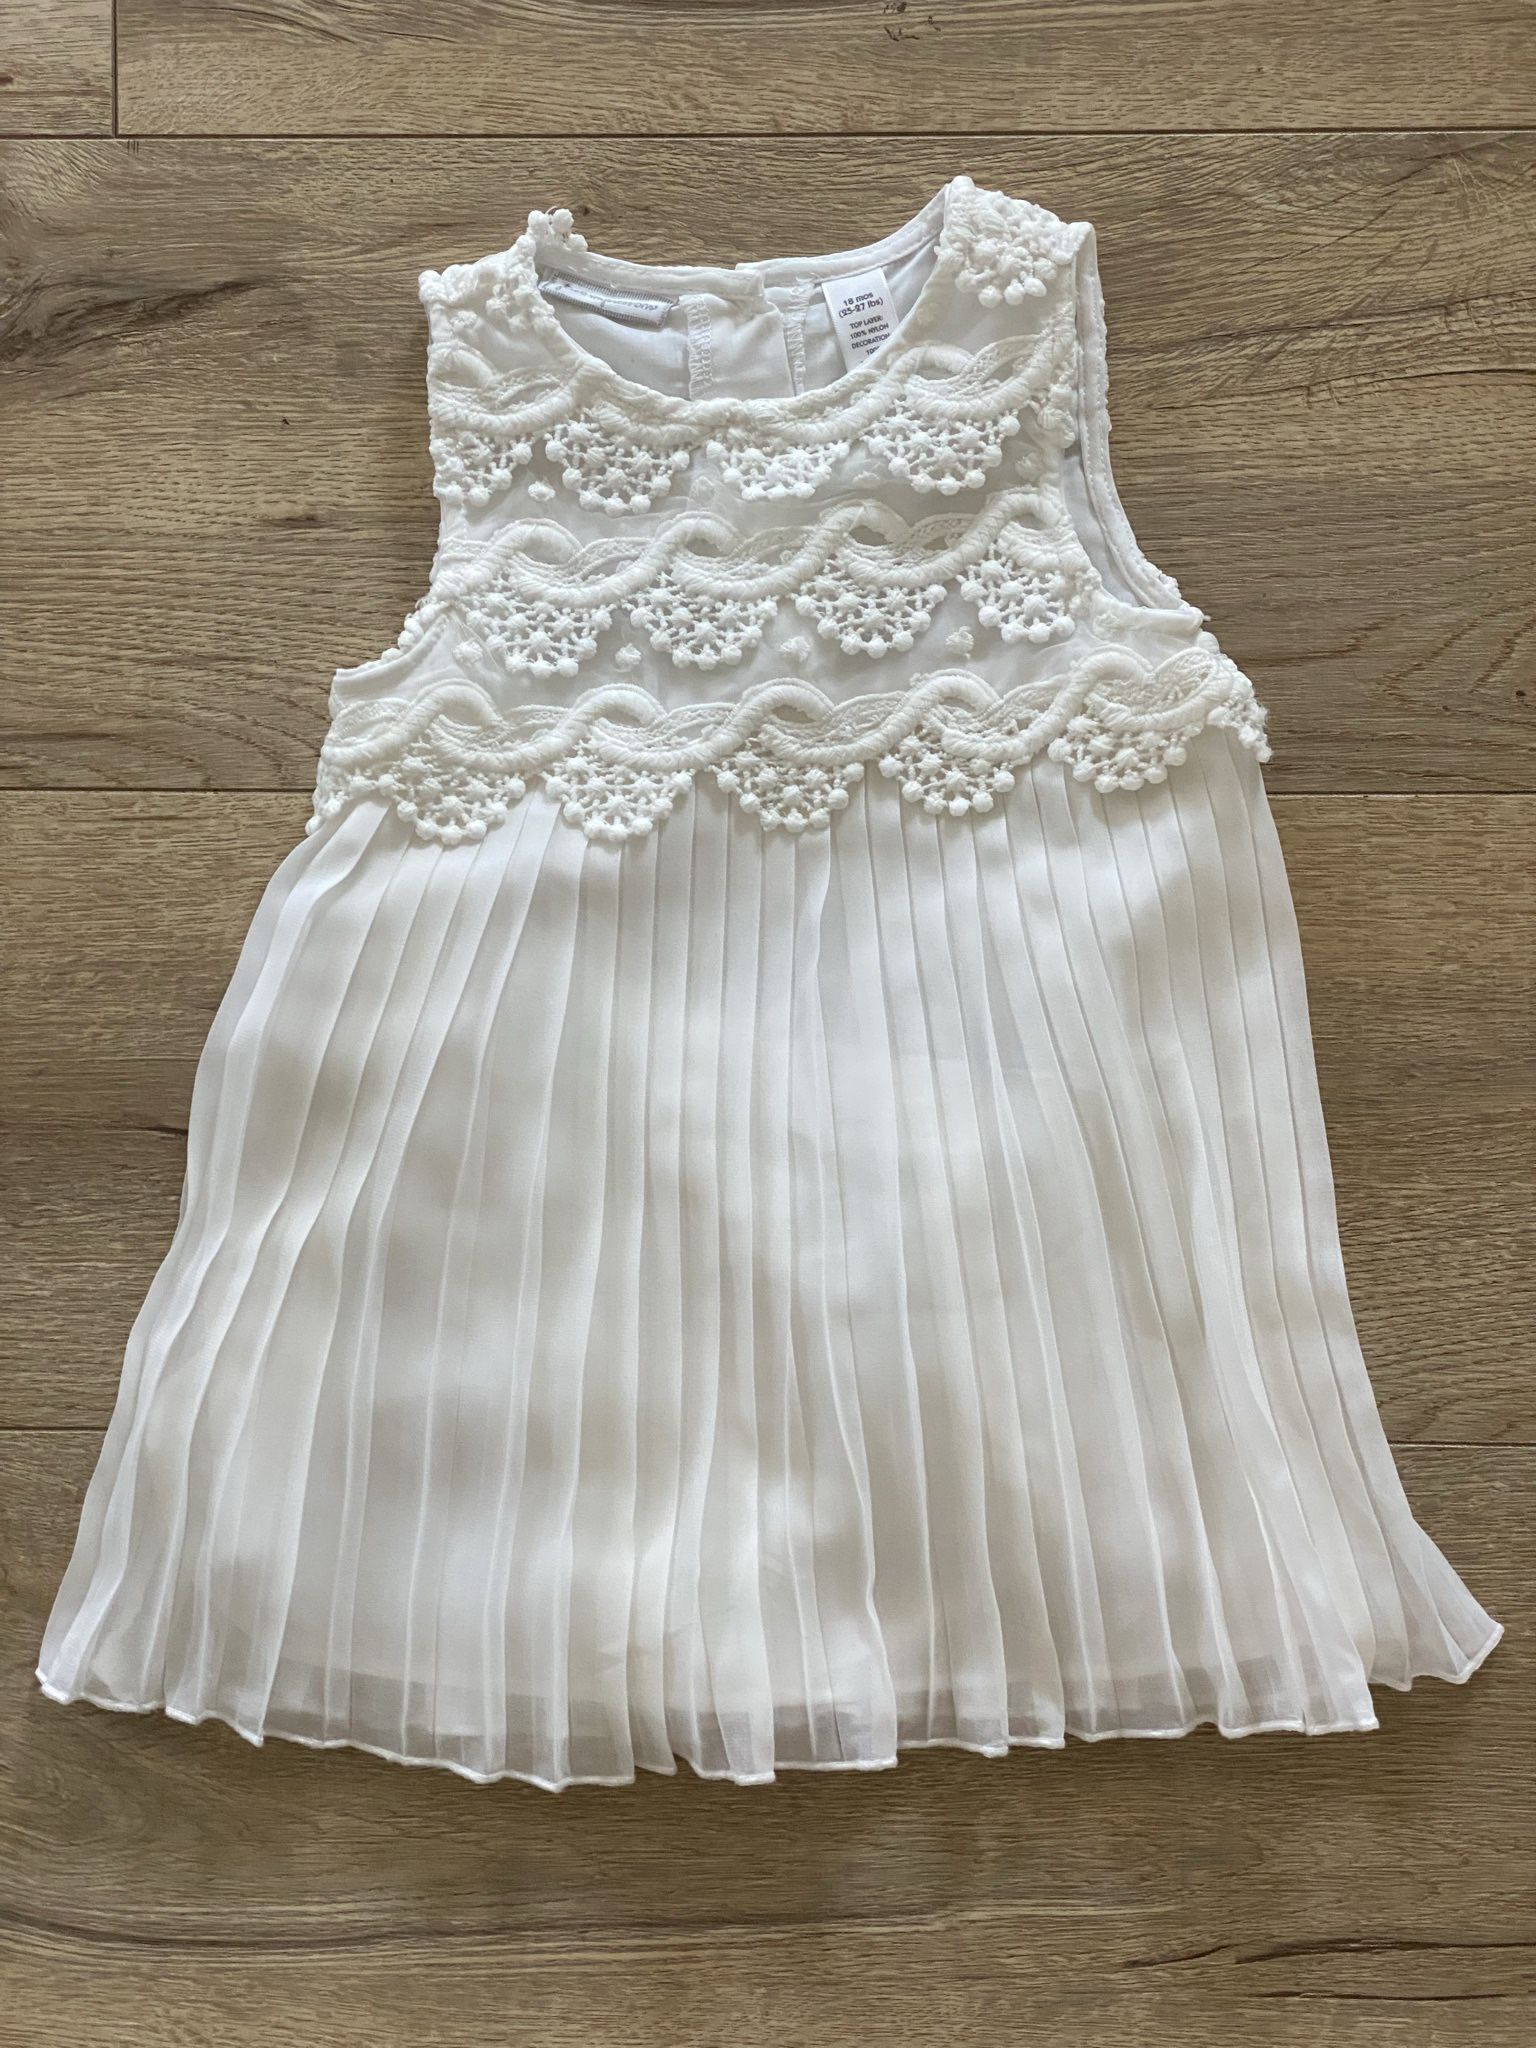 BABY GIRL’S WHITE DRESS 18mos